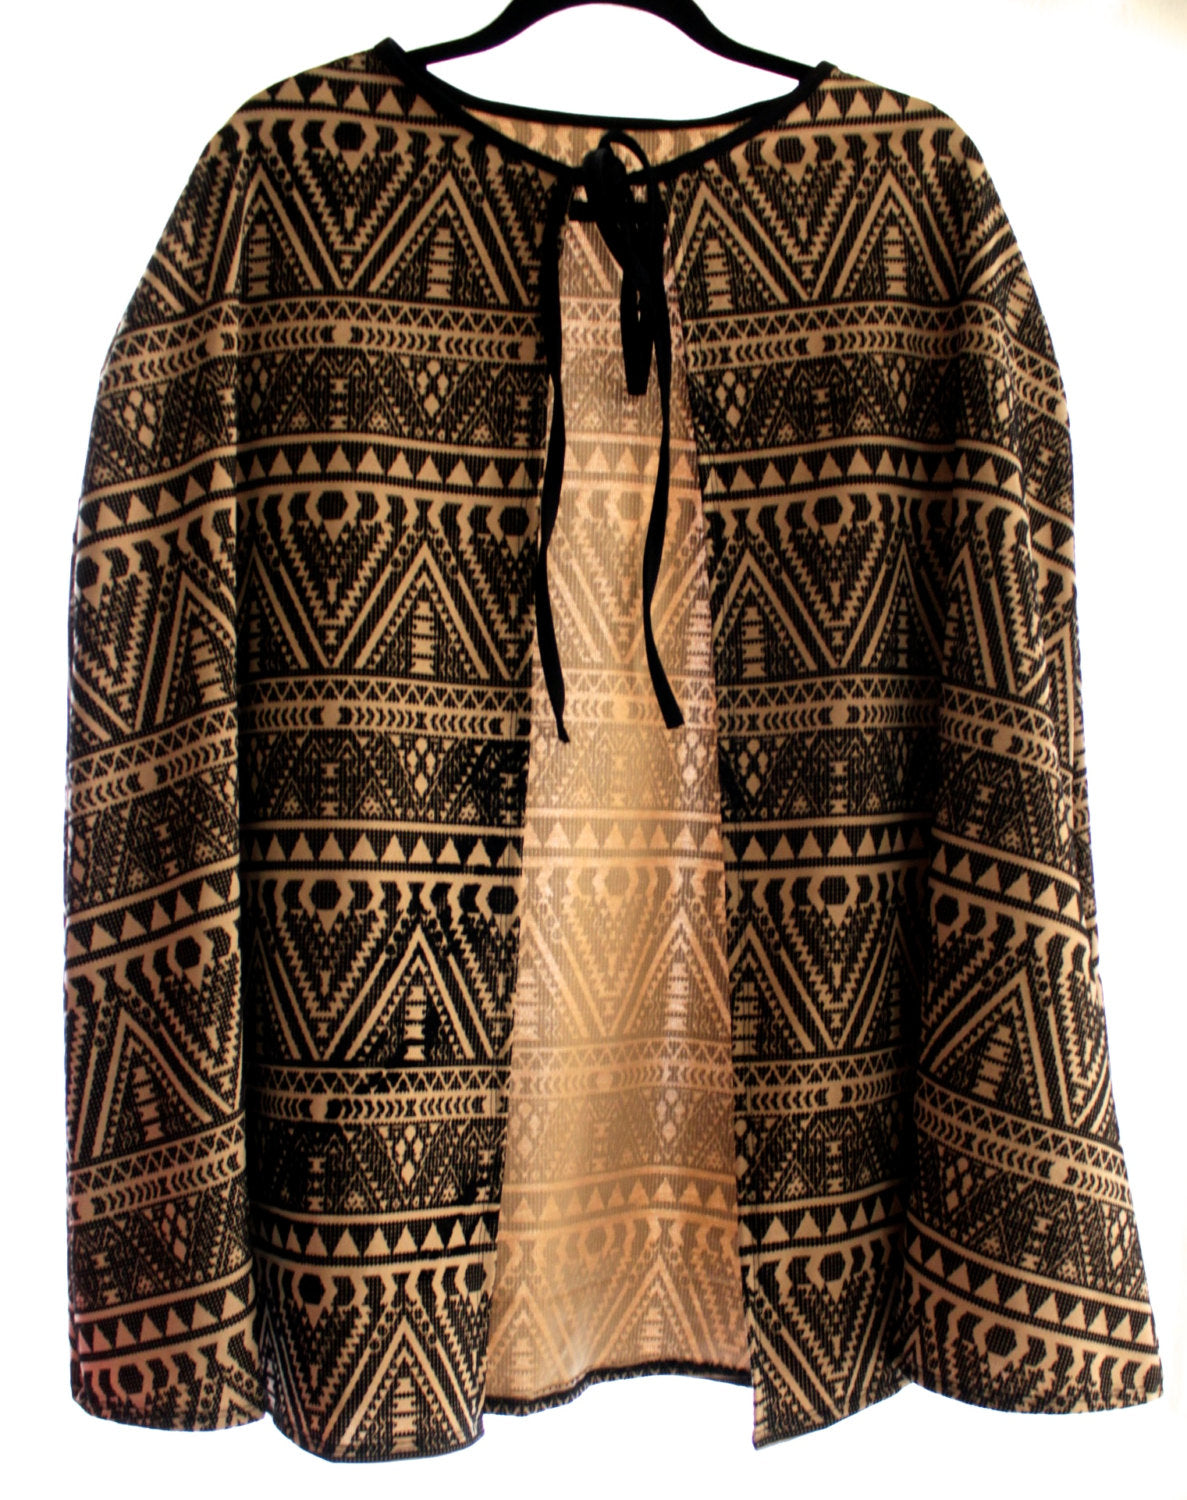 Muheeka TRIBAL PONCHO CAPE, Handmade Tribal Pattern Cape,